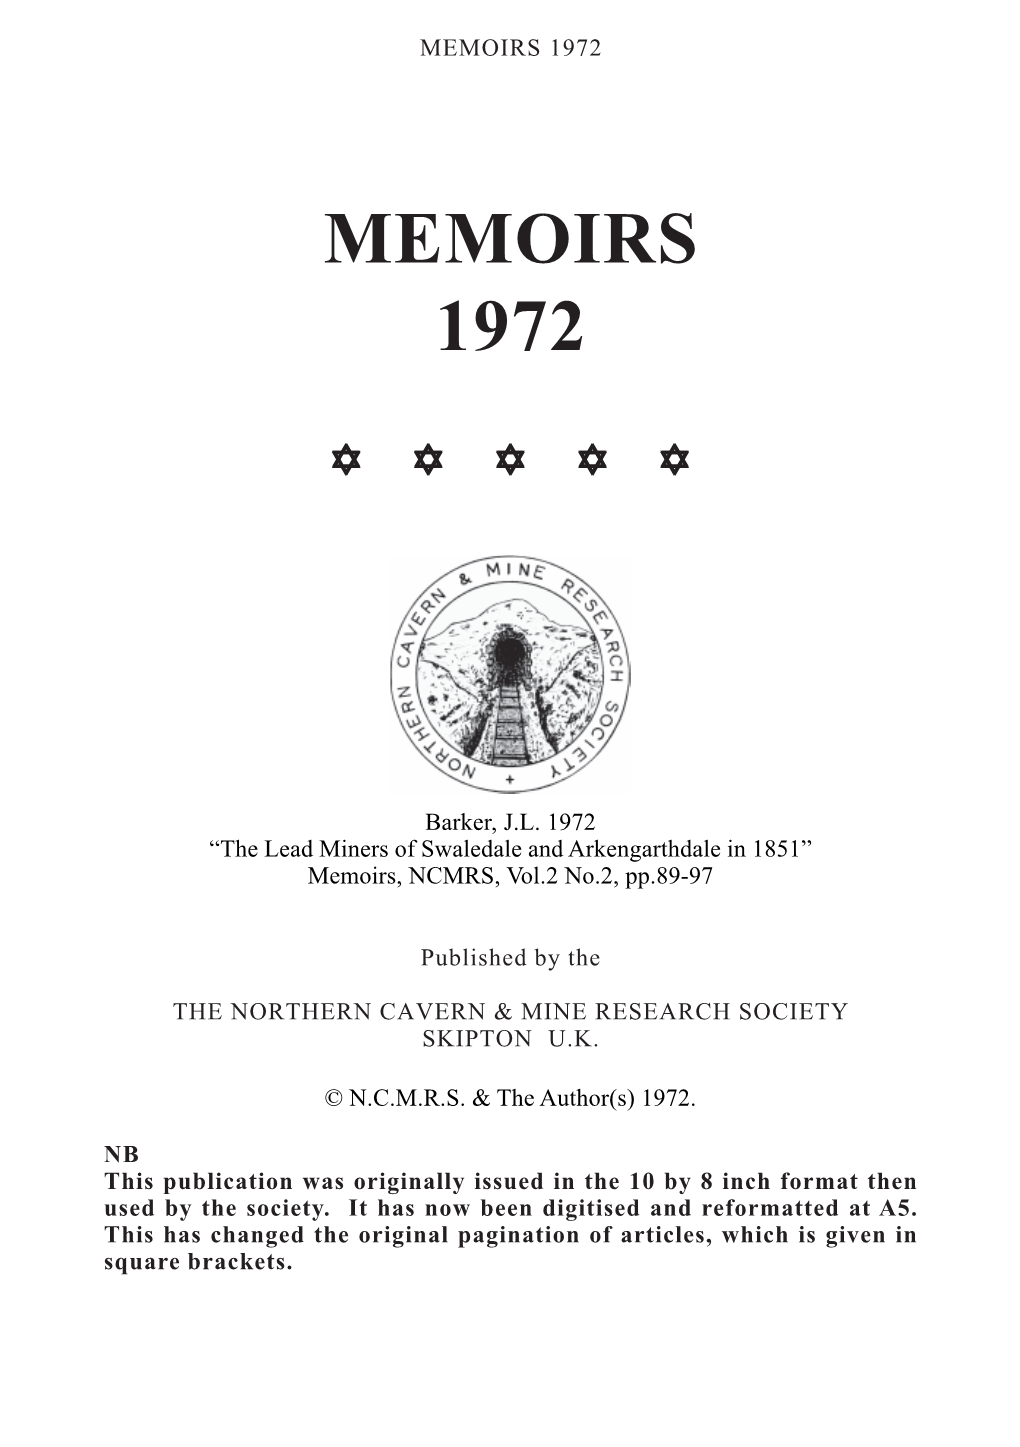 The Lead Miners of Swaledale and Arkengarthdale in 1851” Memoirs, NCMRS, Vol.2 No.2, Pp.89-97